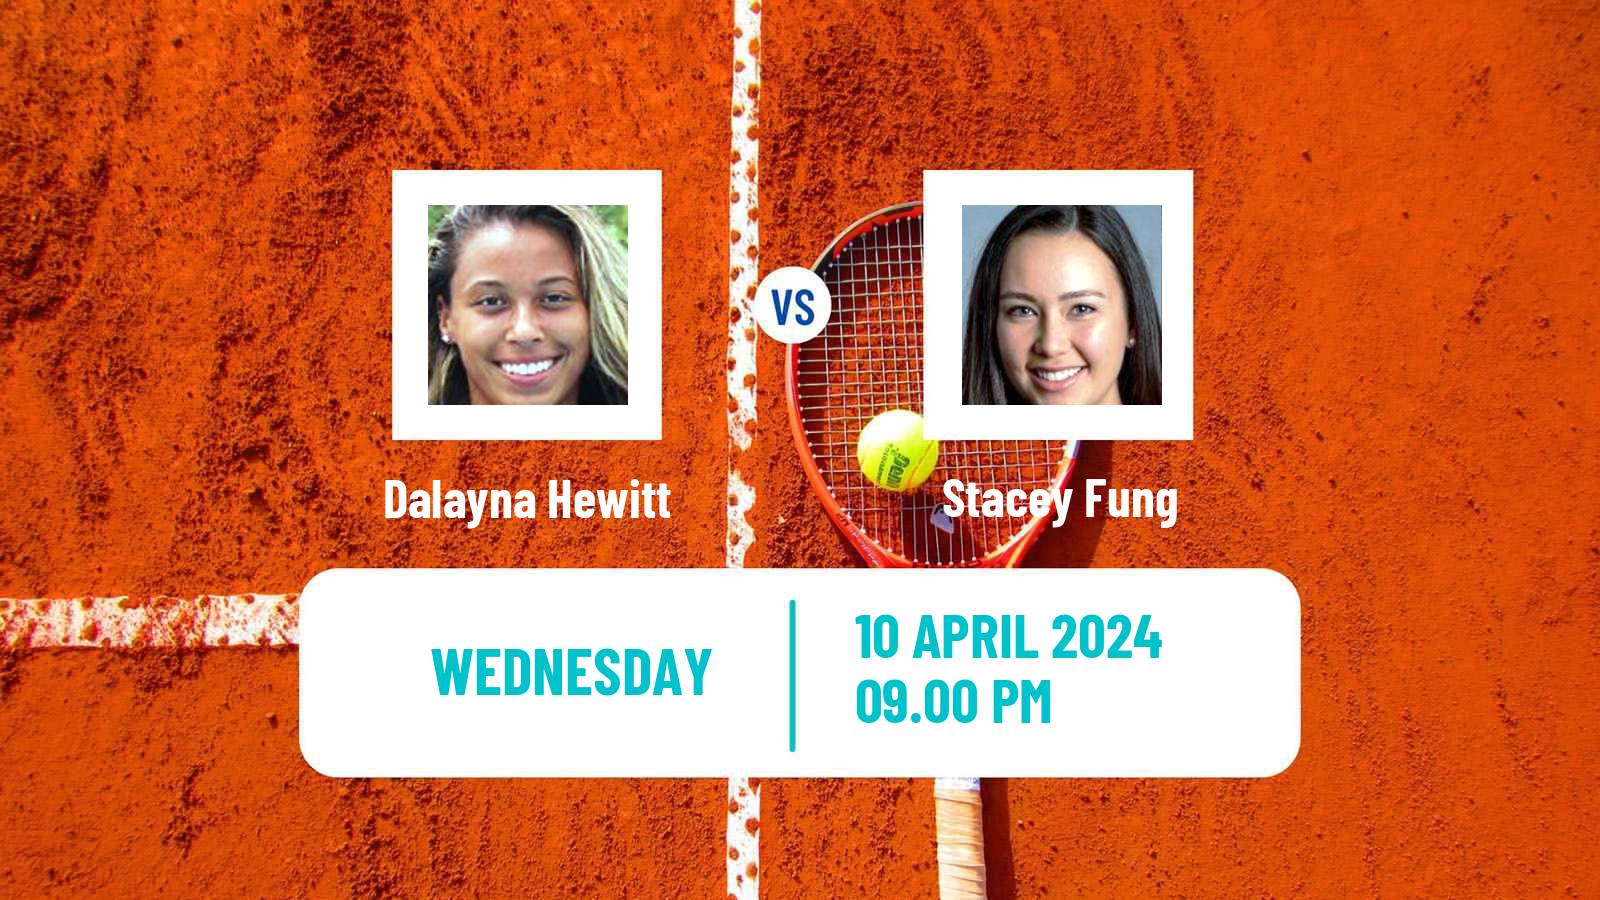 Tennis ITF W35 Osaka Women Dalayna Hewitt - Stacey Fung